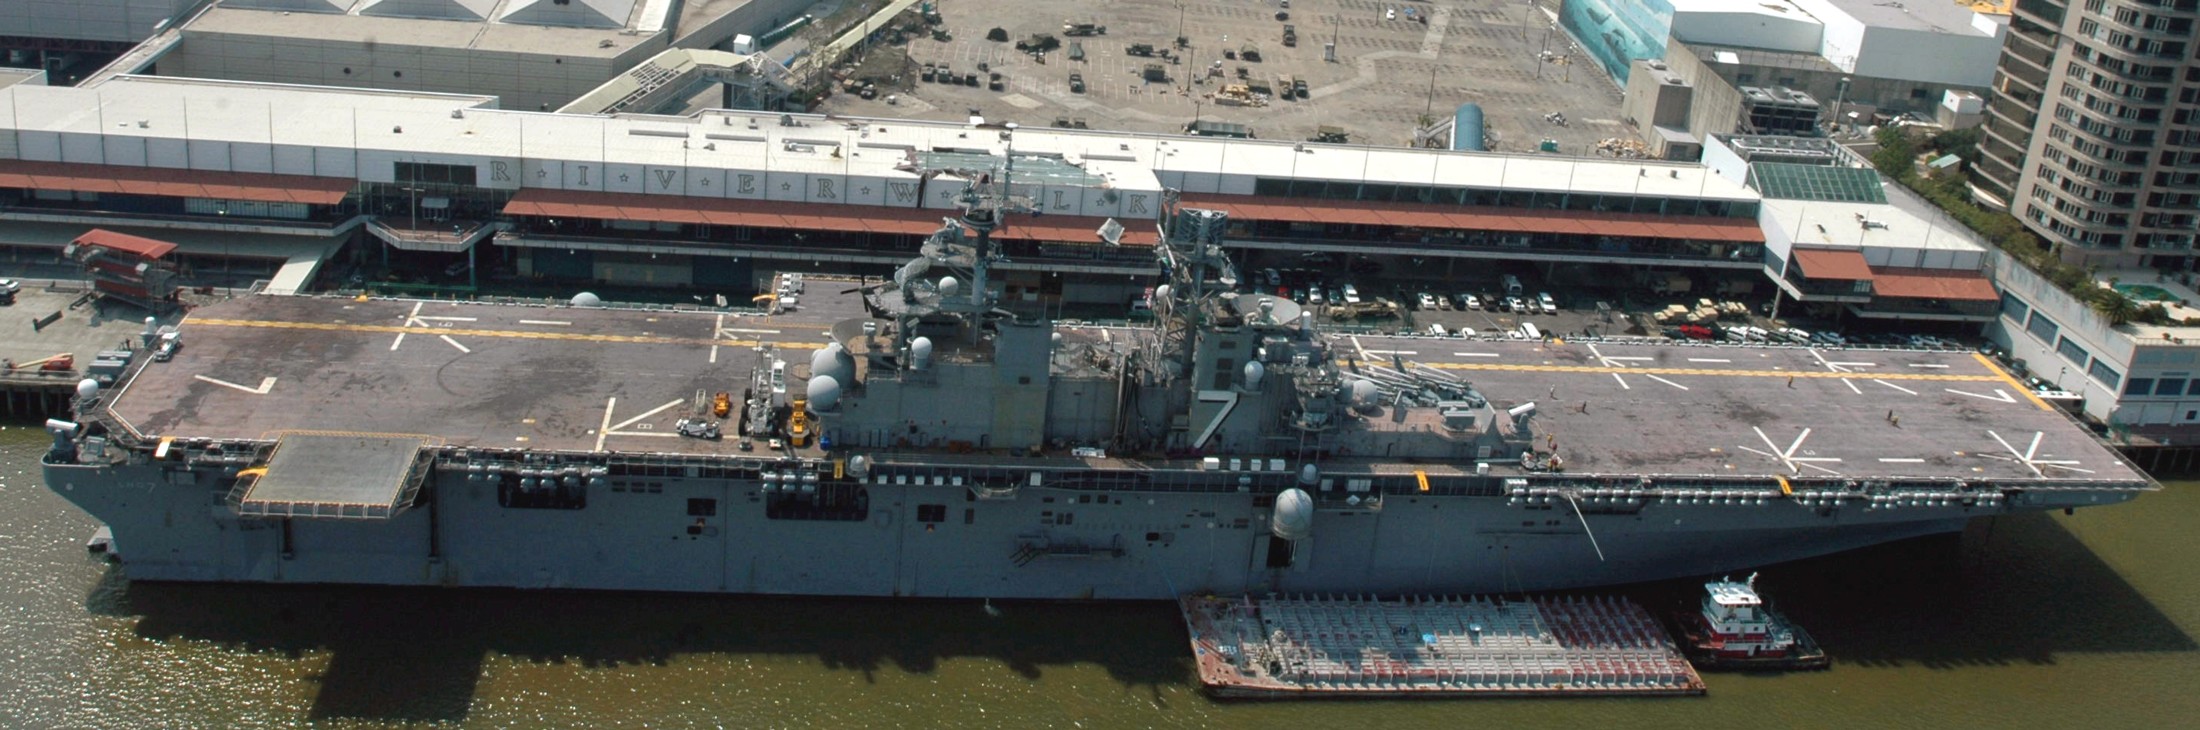 lhd-7 uss iwo jima wasp class amphibious assault ship dock landing helicopter us navy new orleans 2005 22